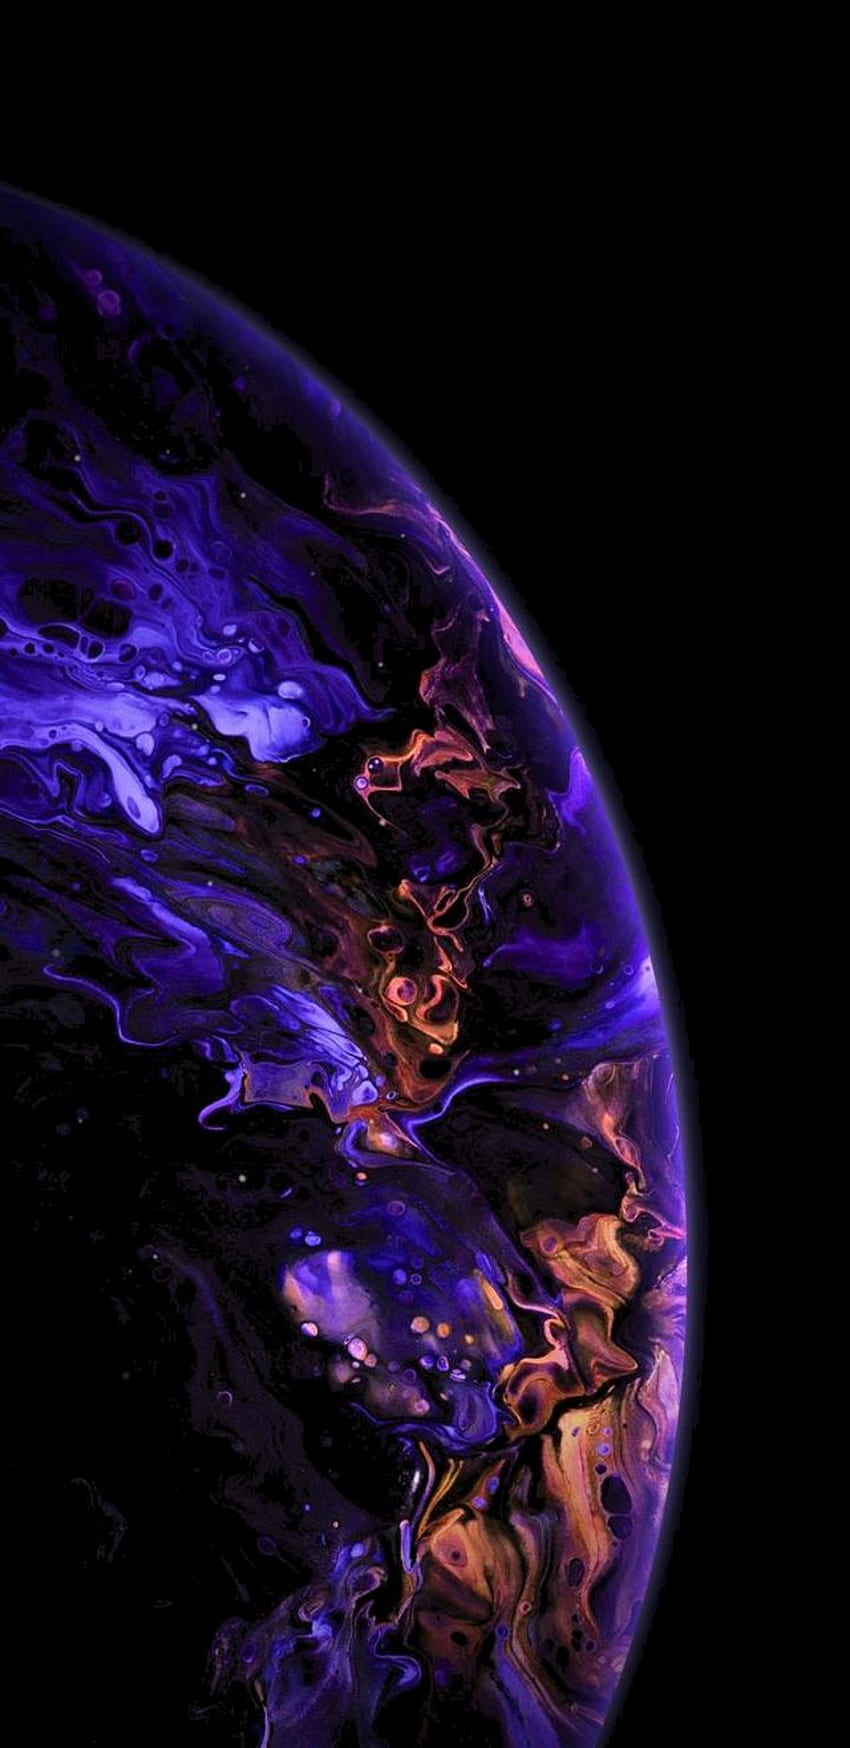 Reddit - Amoledbackground - Planeta Píldora Púrpura []. iPhone colorido, iPhone, iPhone original, teléfono OLED fondo de pantalla del teléfono